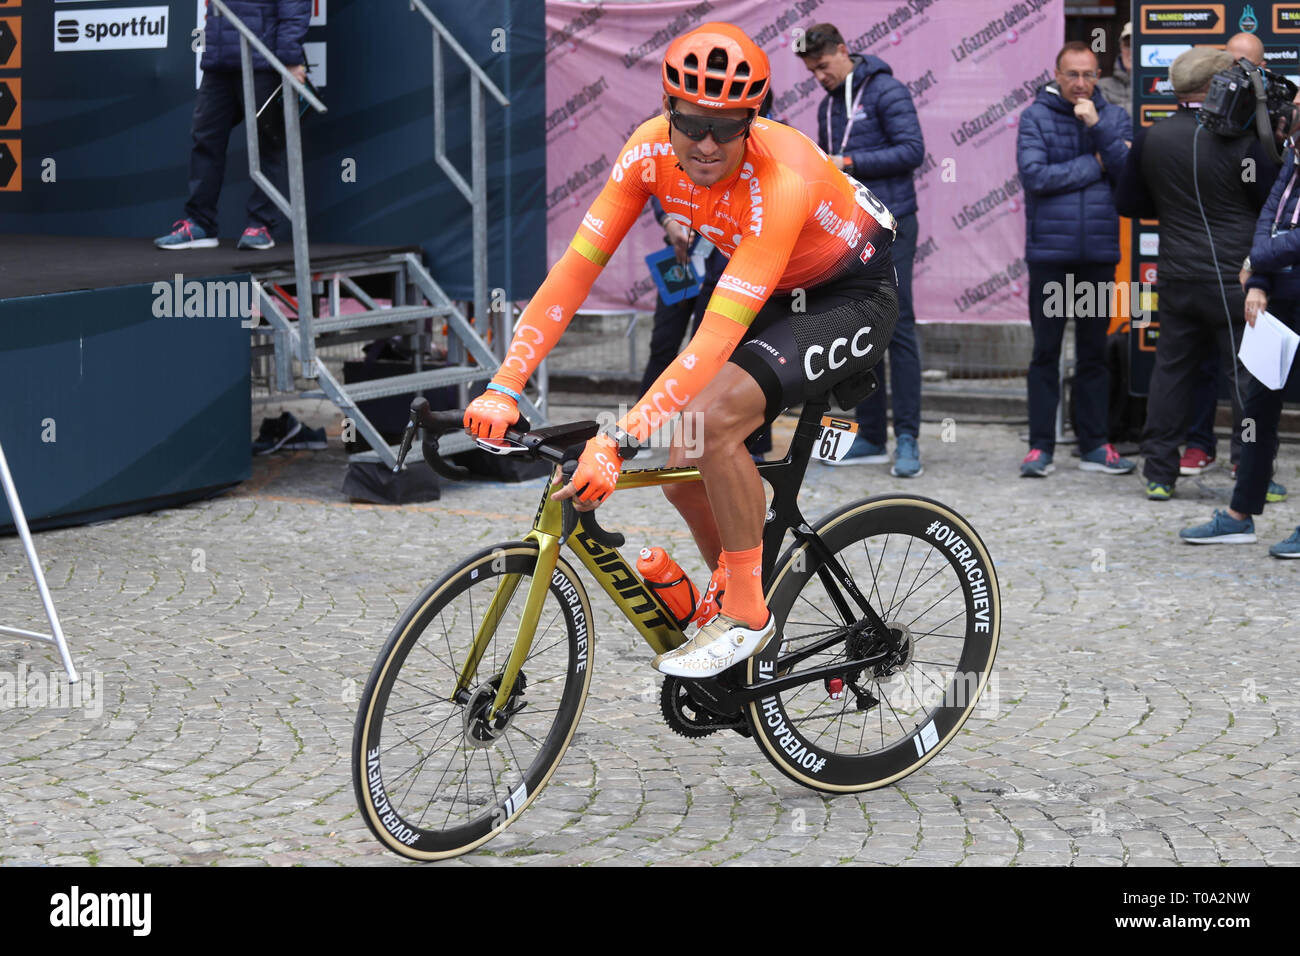 Jesi, Italy. 18th Mar, 2019. Greg Van Avermaet of Team CCC during the  Tirreno Adriatico 2019 6eme Etape Matelica - Jesi on March 18, 2019 in  Jesi, Italy - Photo Laurent Lairys/MAXPPP